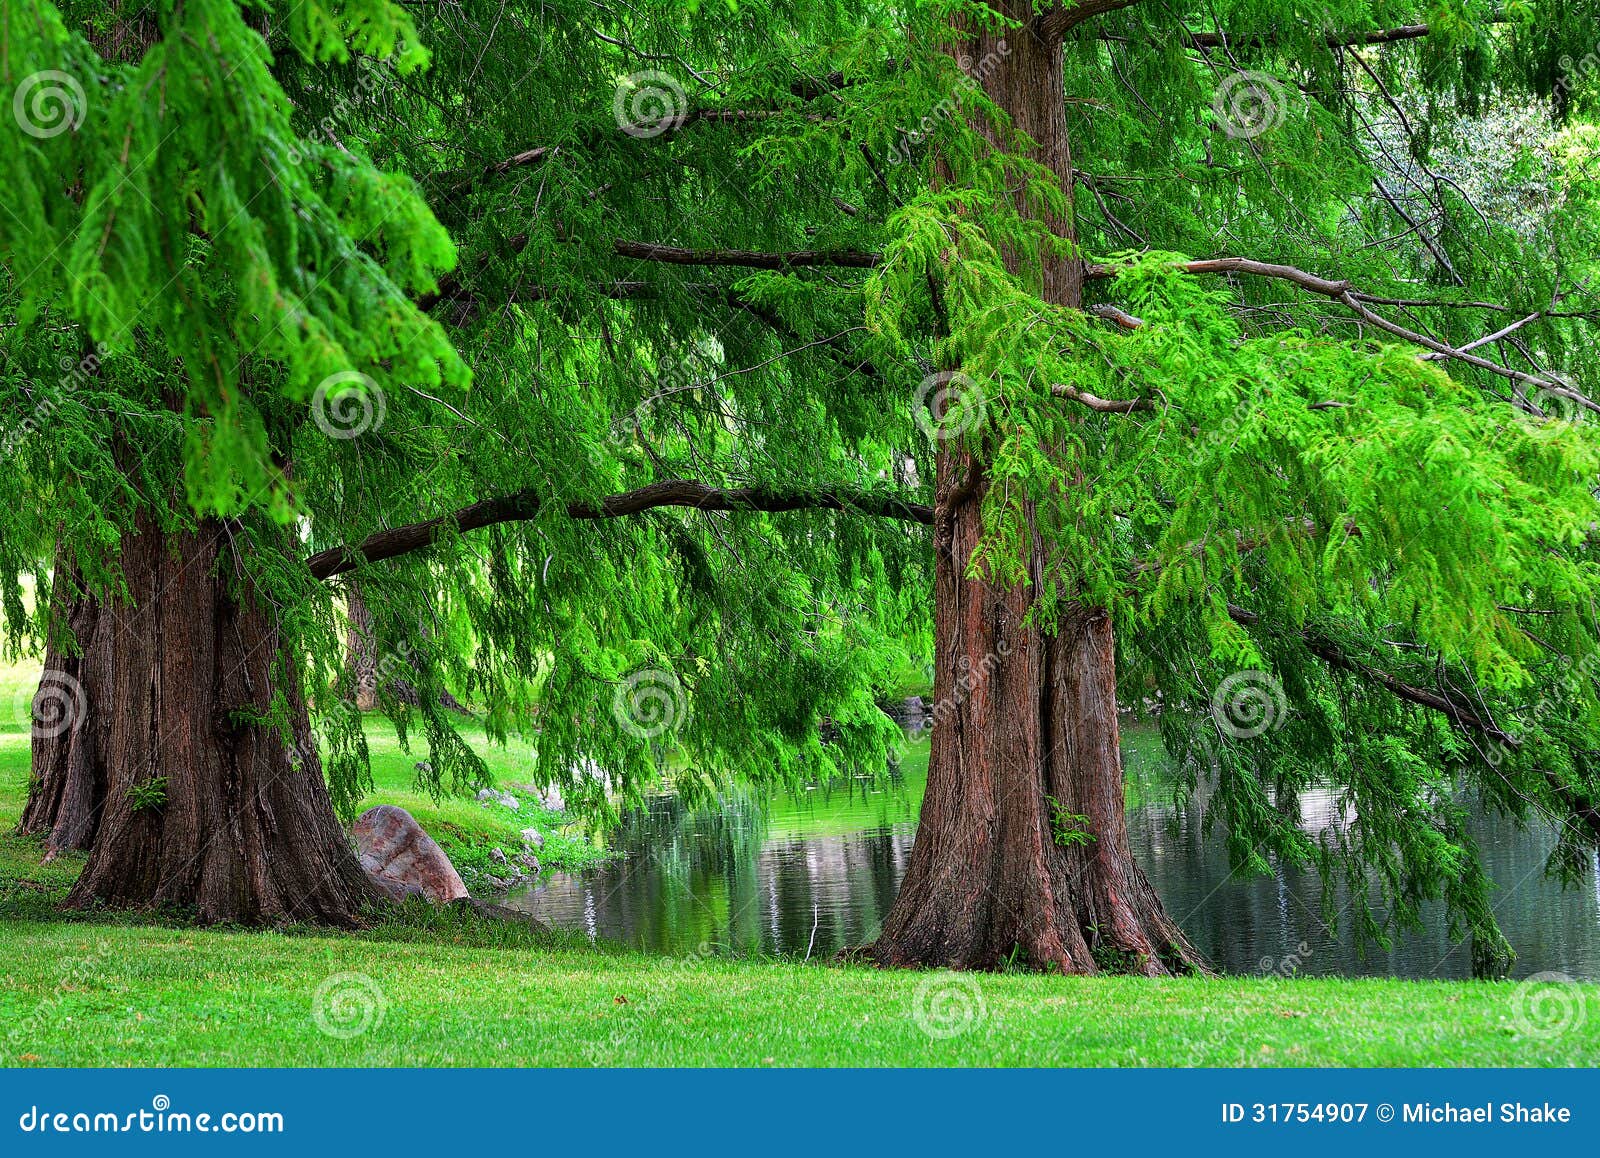 dawn redwood trees